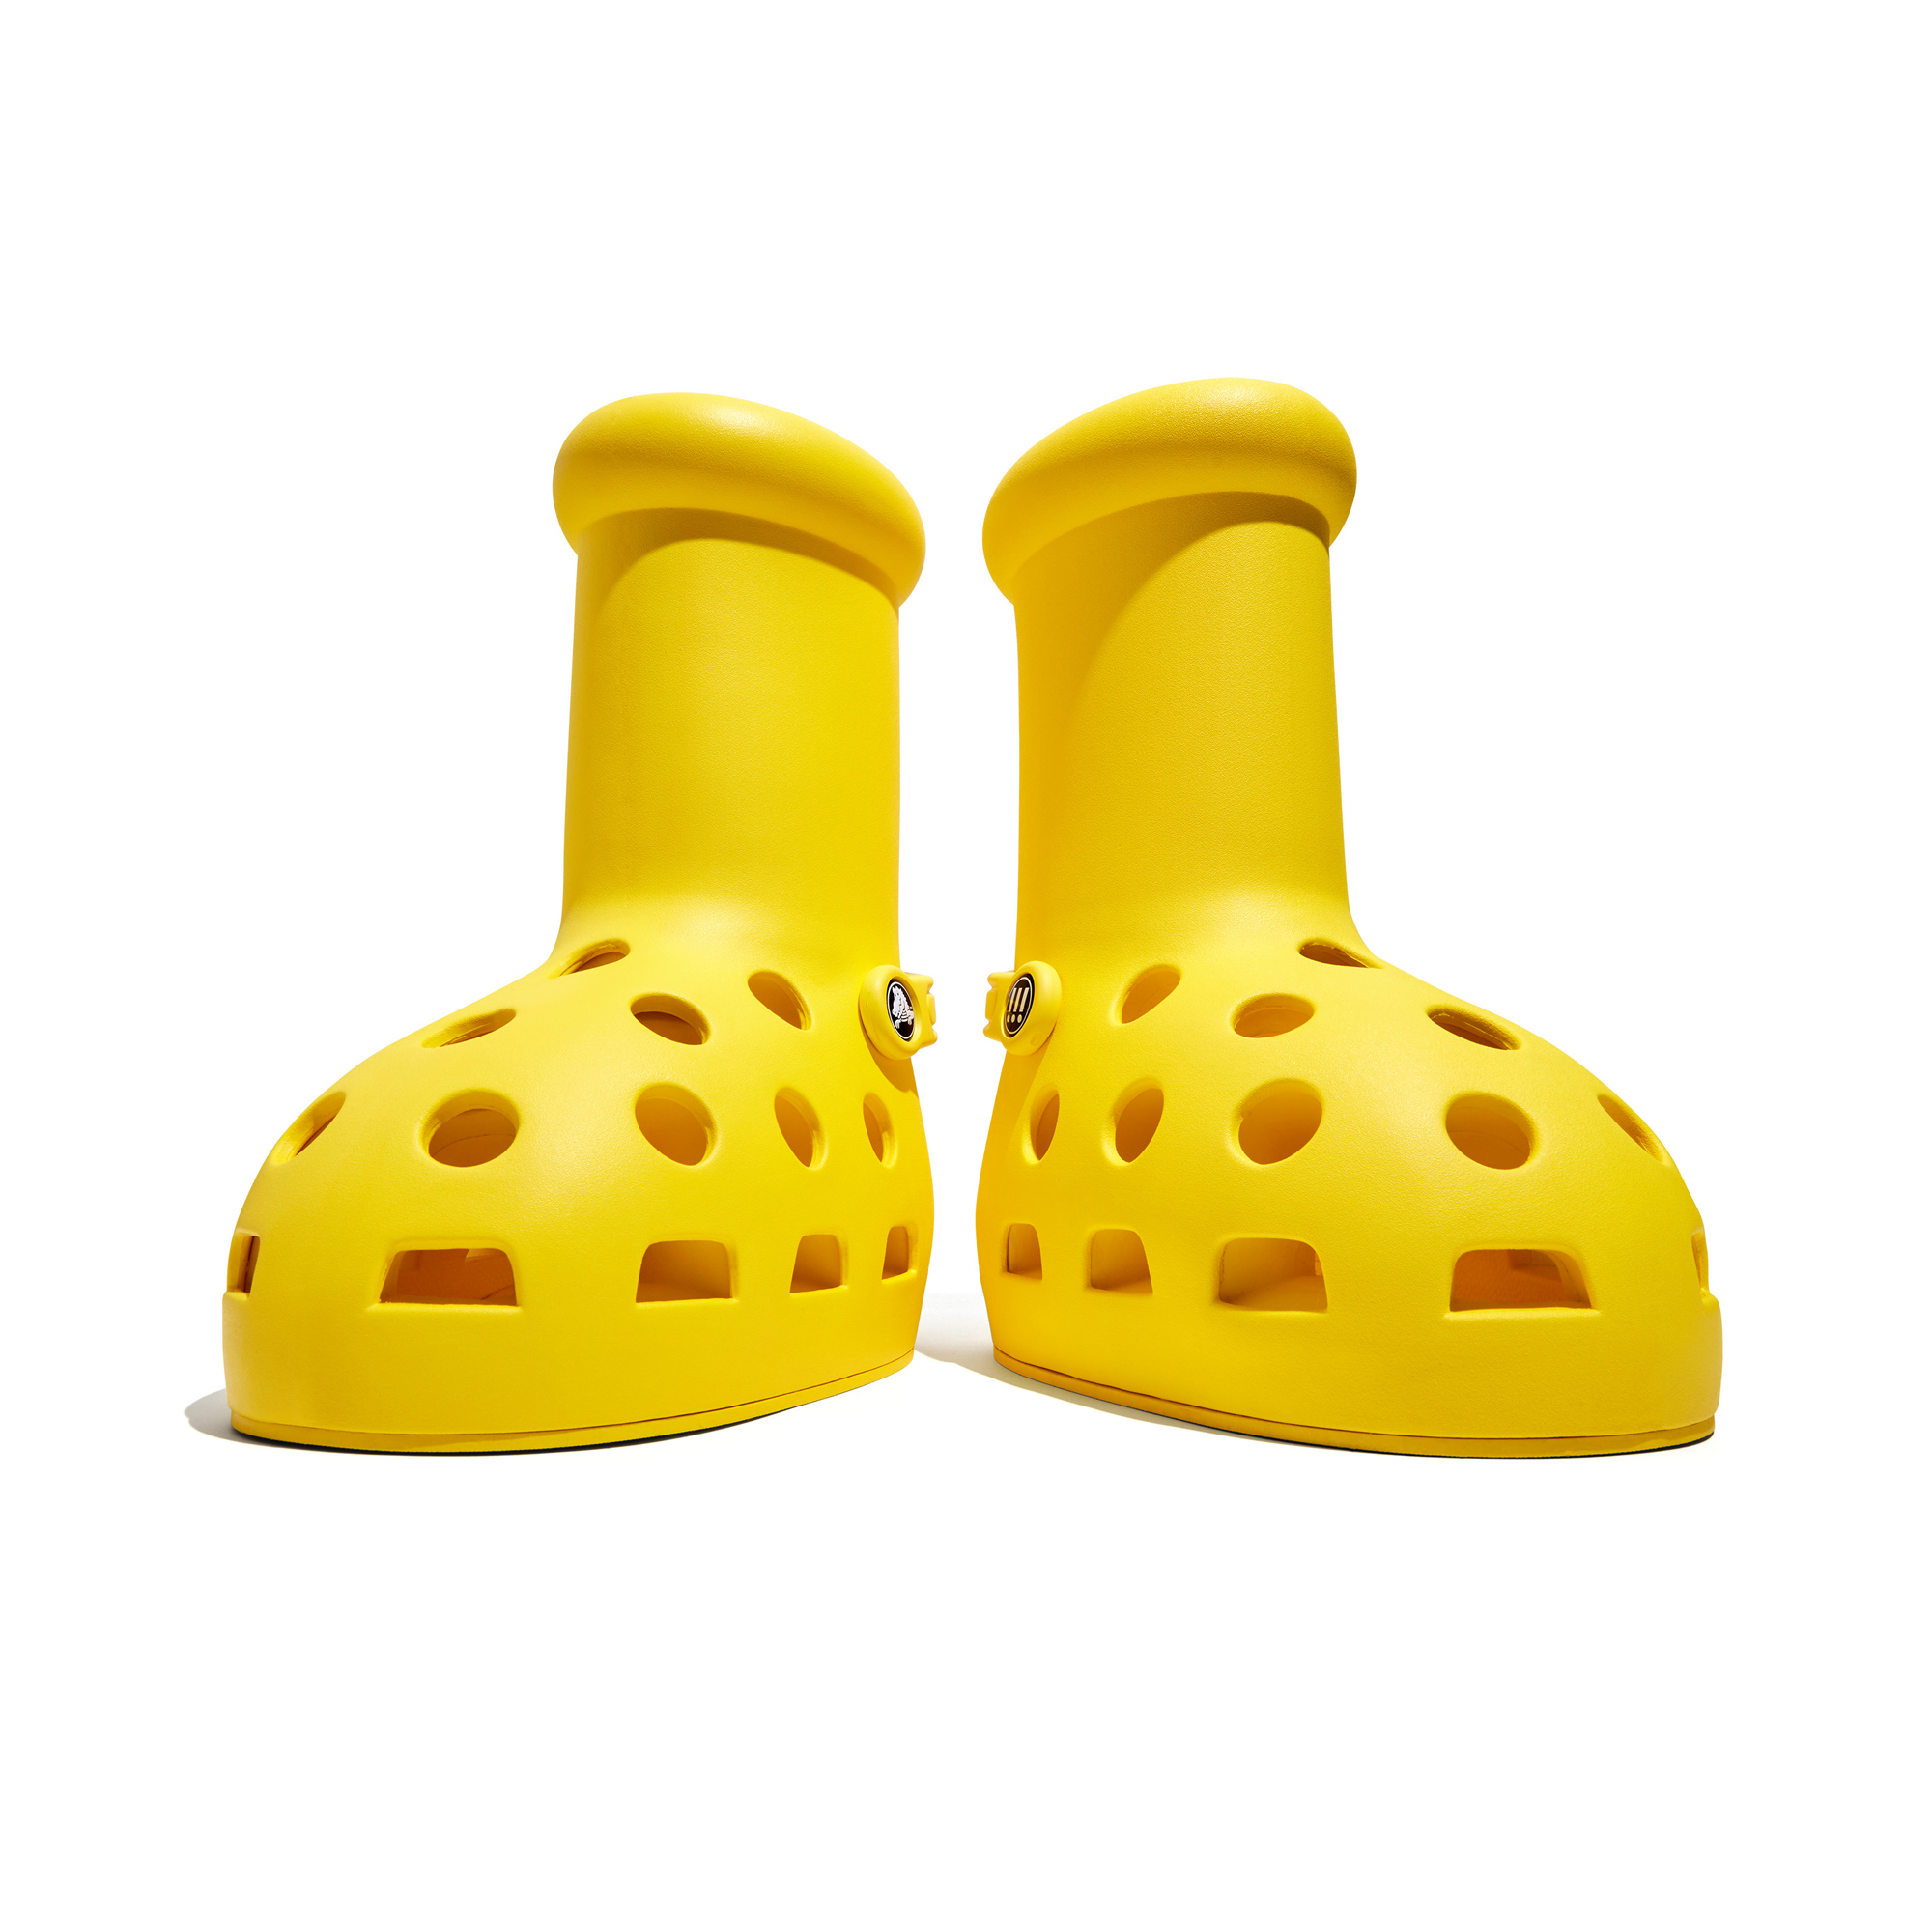 Crocs x MSCHF “Big Yellow Boot” | Nice Kicks